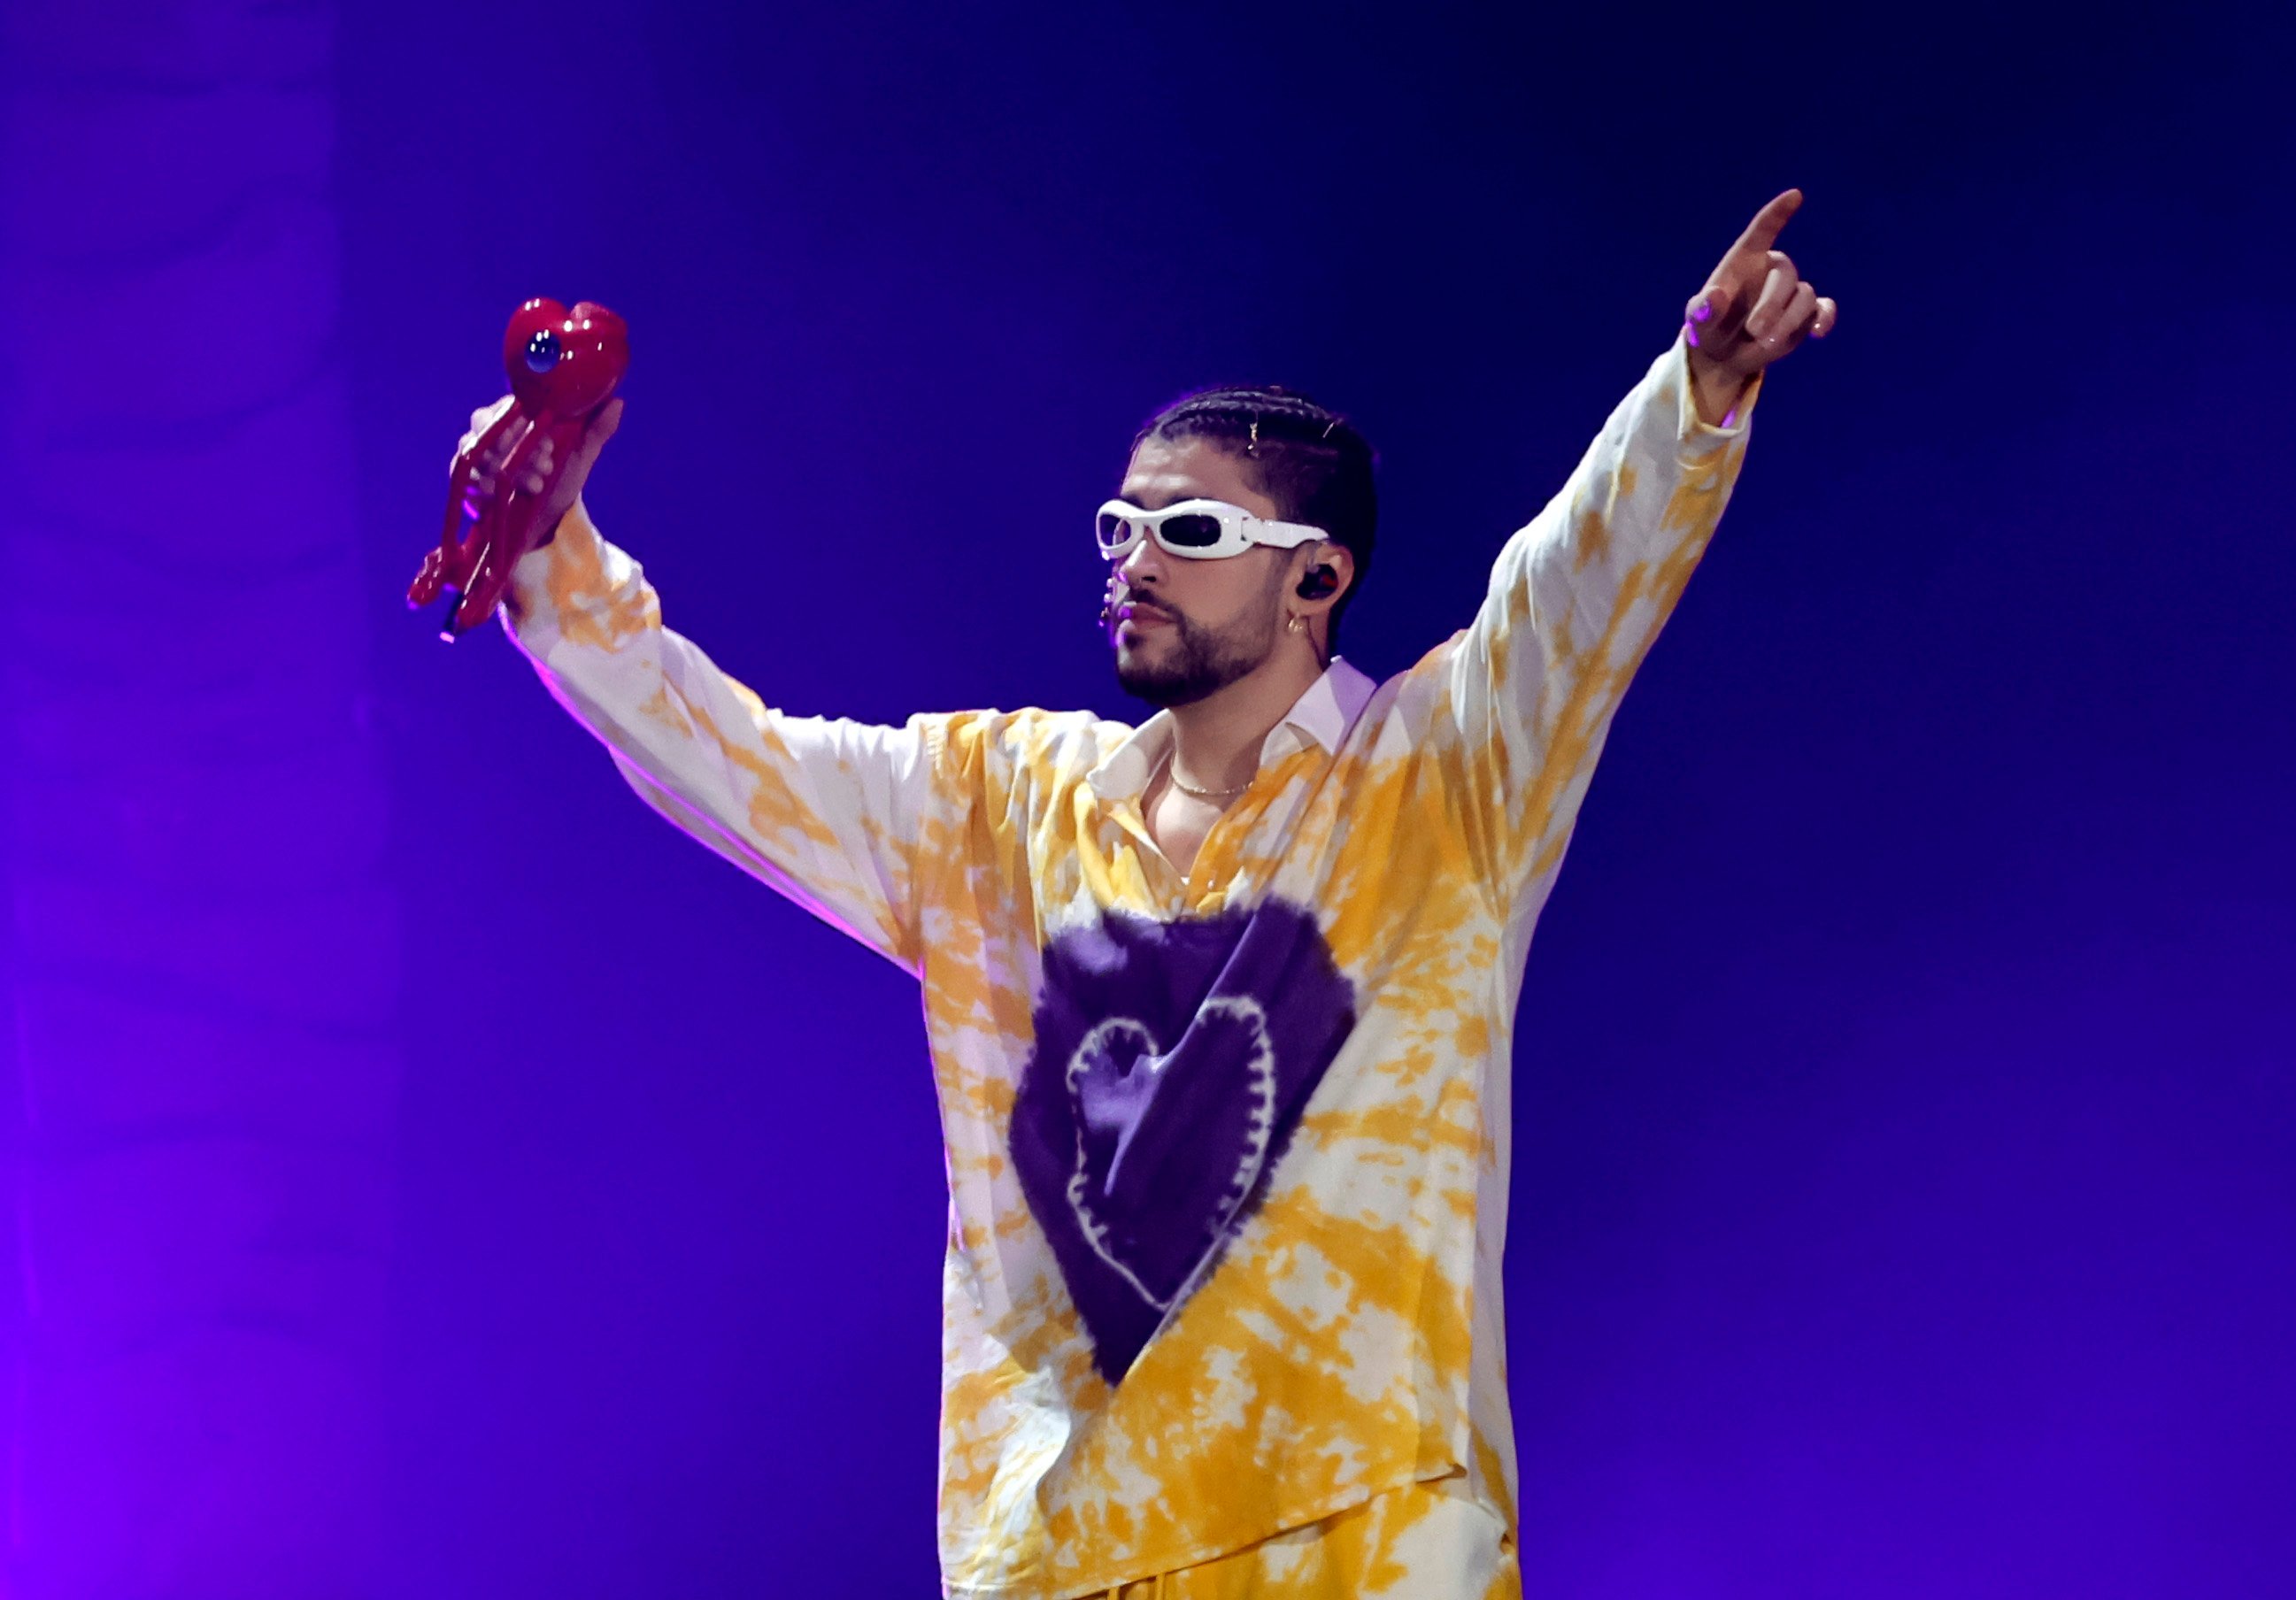 'Despues de la Playa' rapper Bad Bunny performs during his World's Hottest Tour at SoFi Stadium